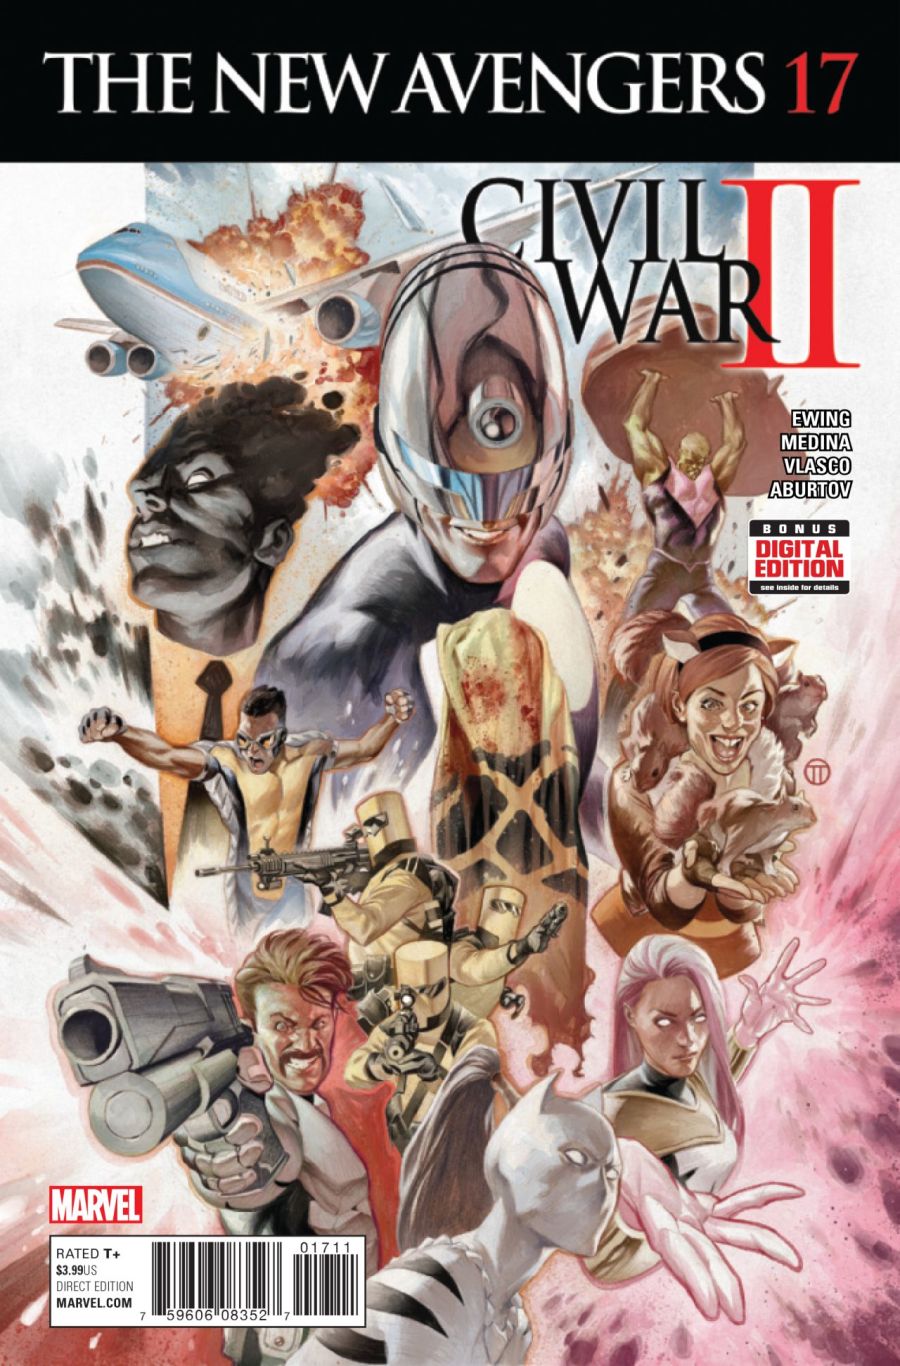 The New Avengers #17